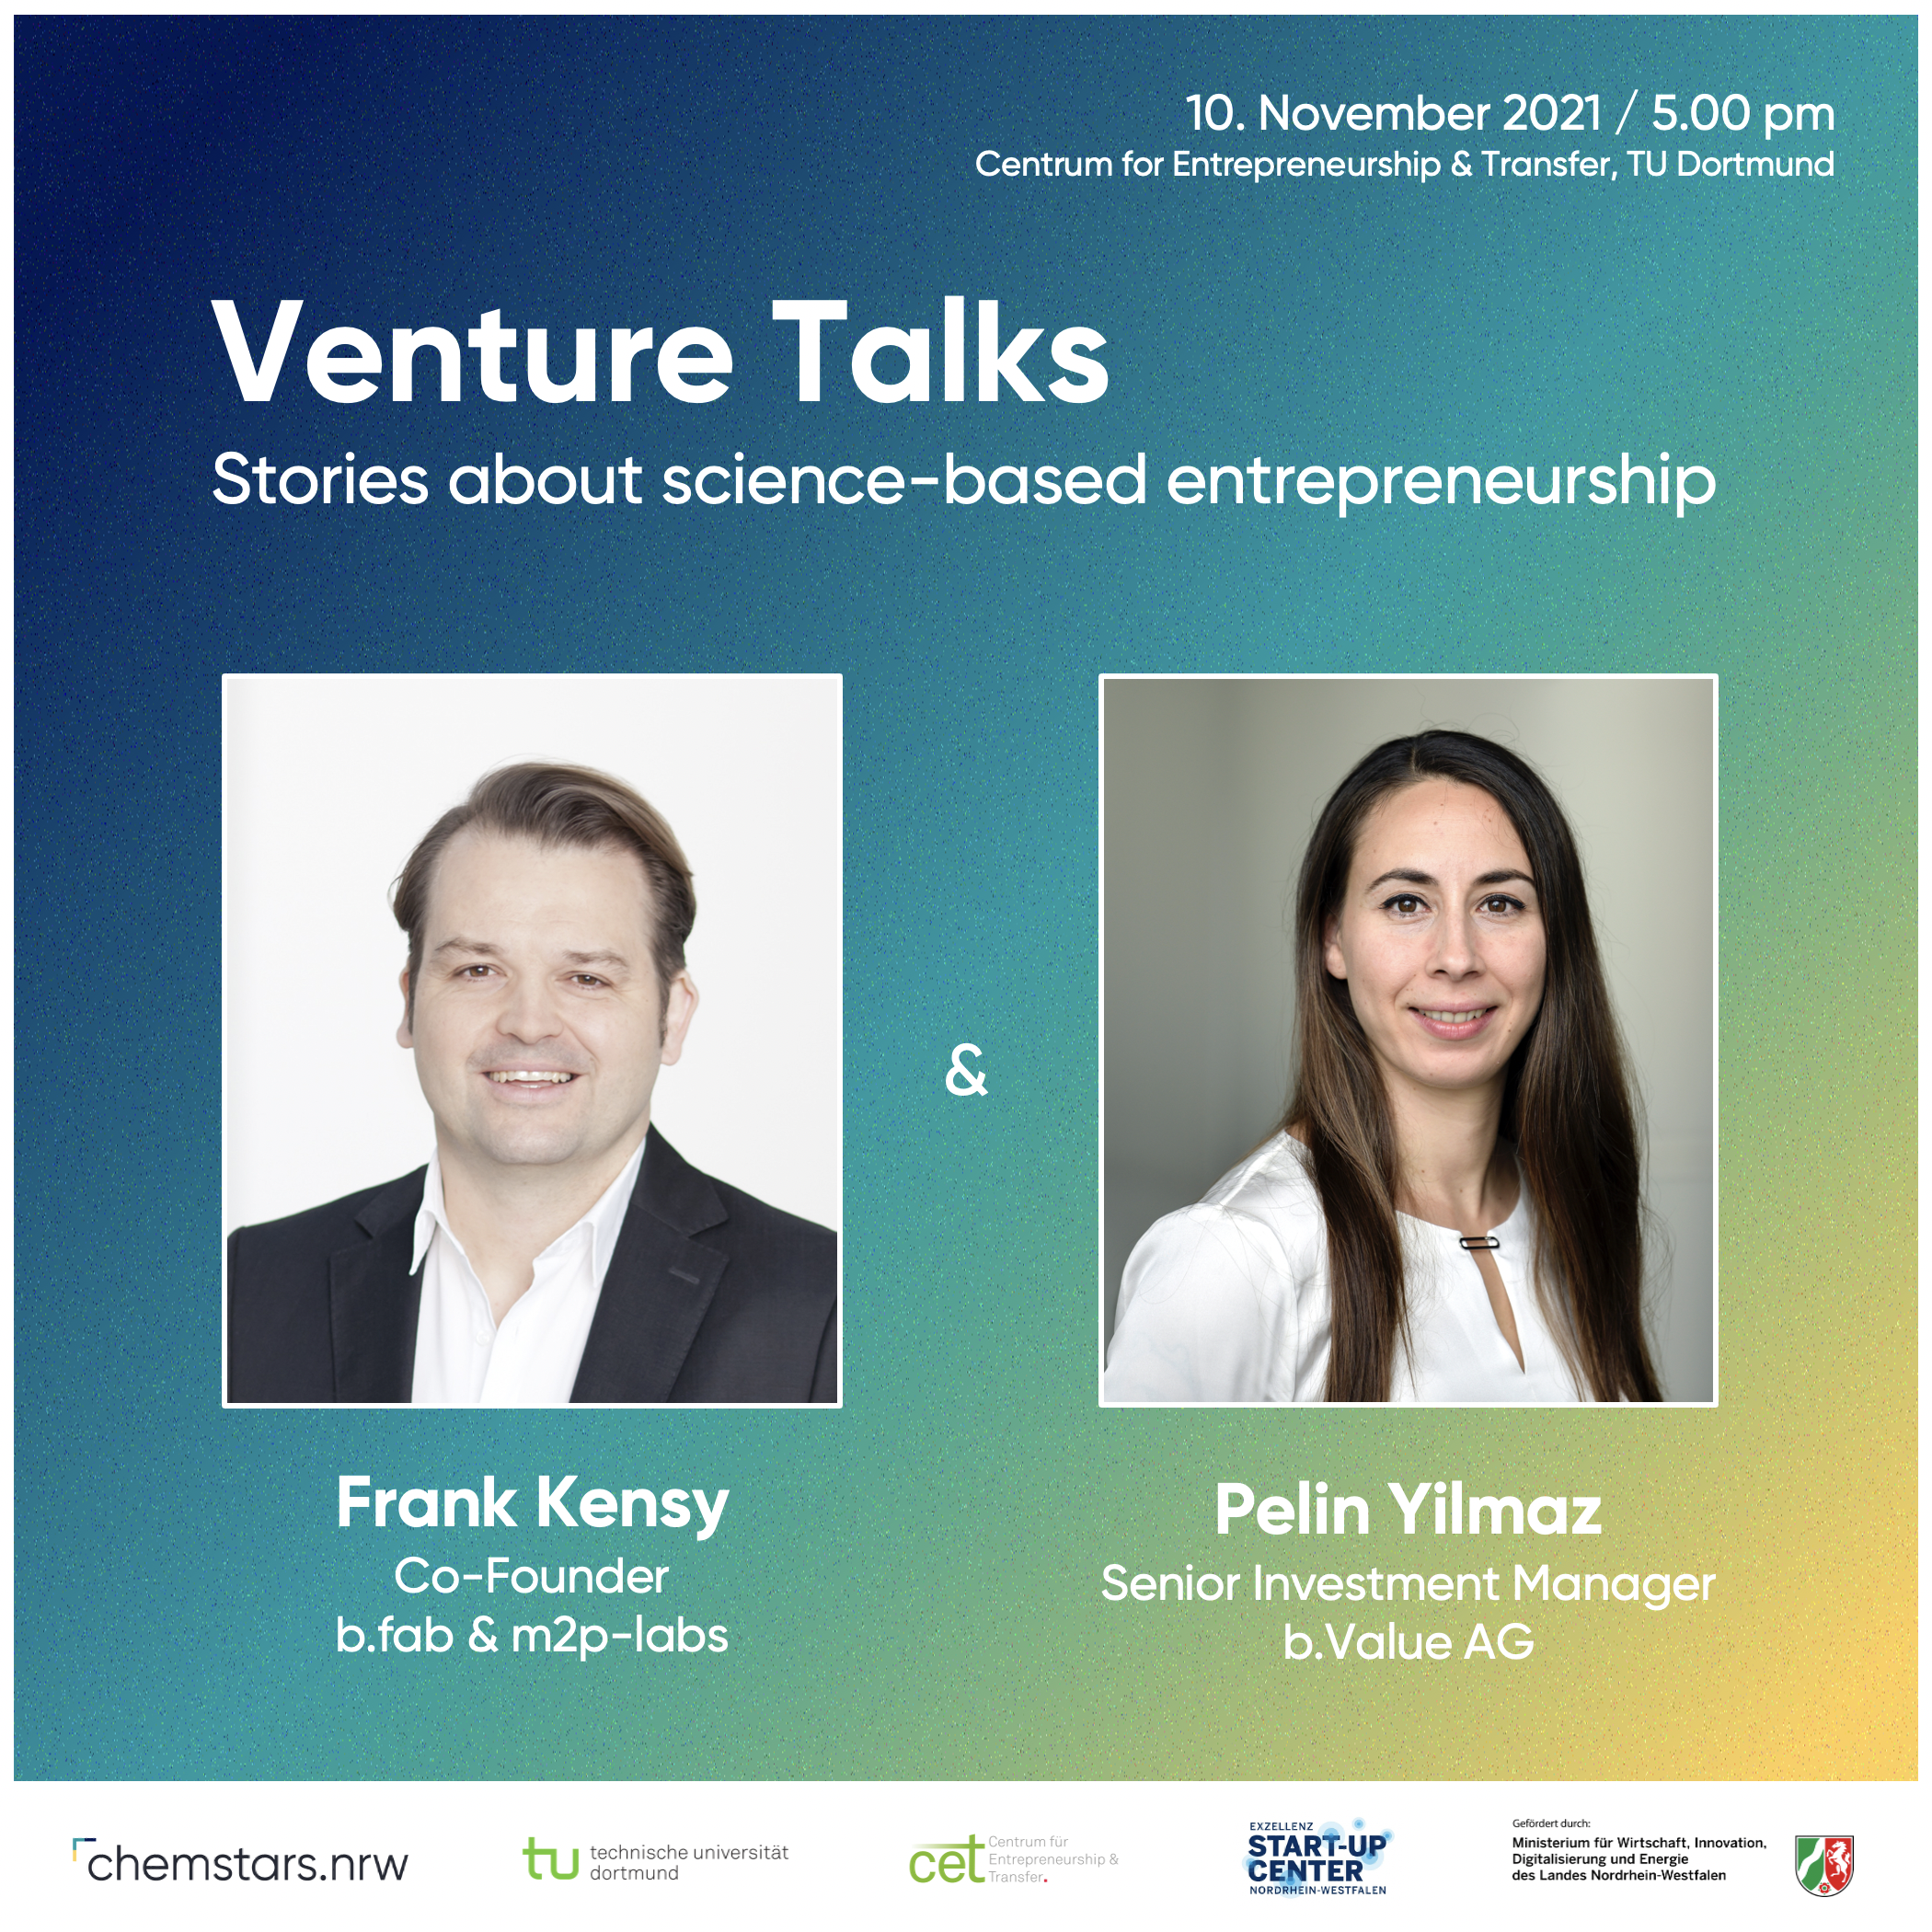 Venture Talk with Frank Kensy and Pelin Yilmaz